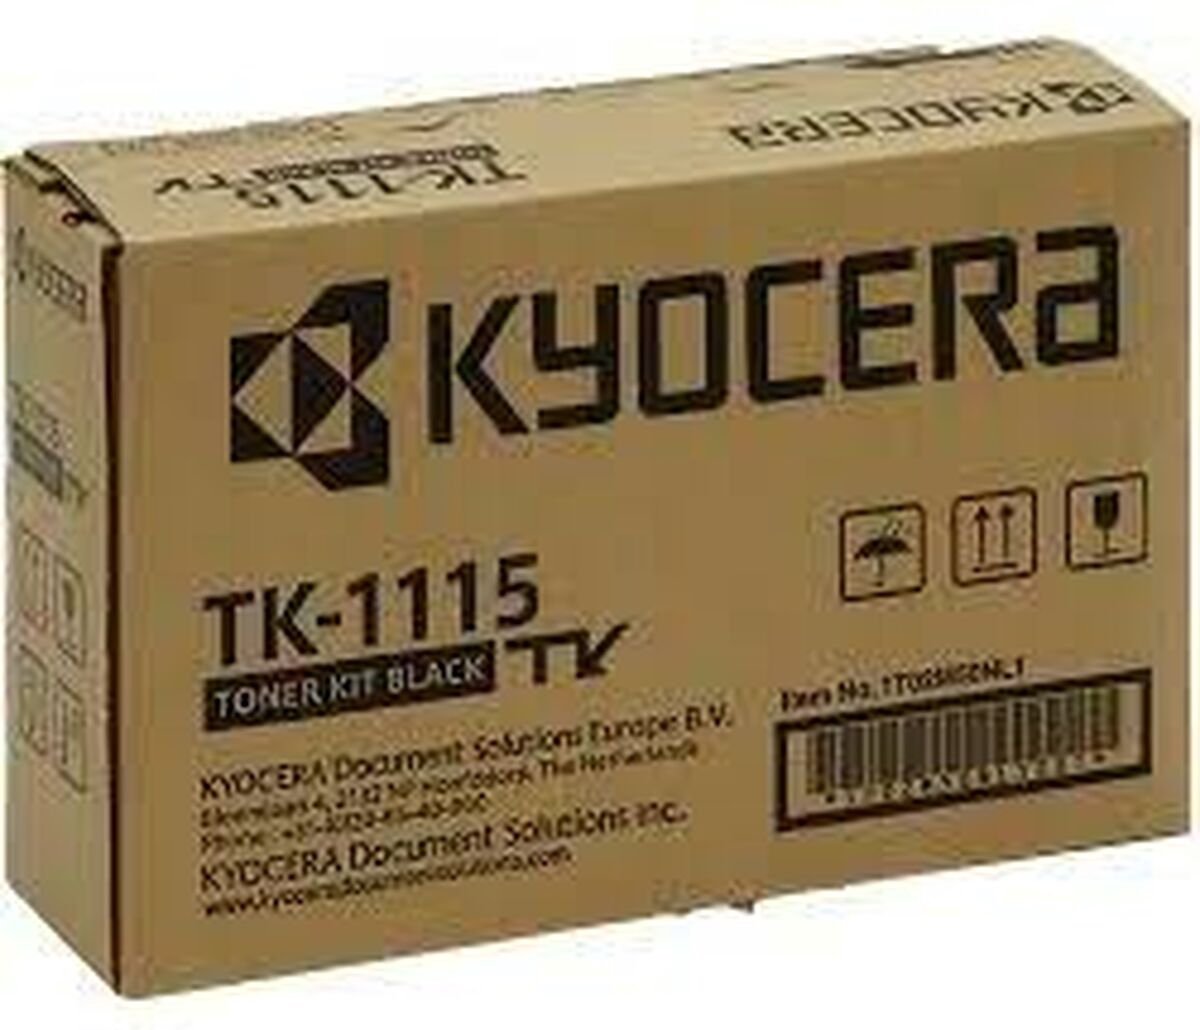 Kyocera - TK-1115 - Tonercartridge - 1 stuk - Origineel - Zwart